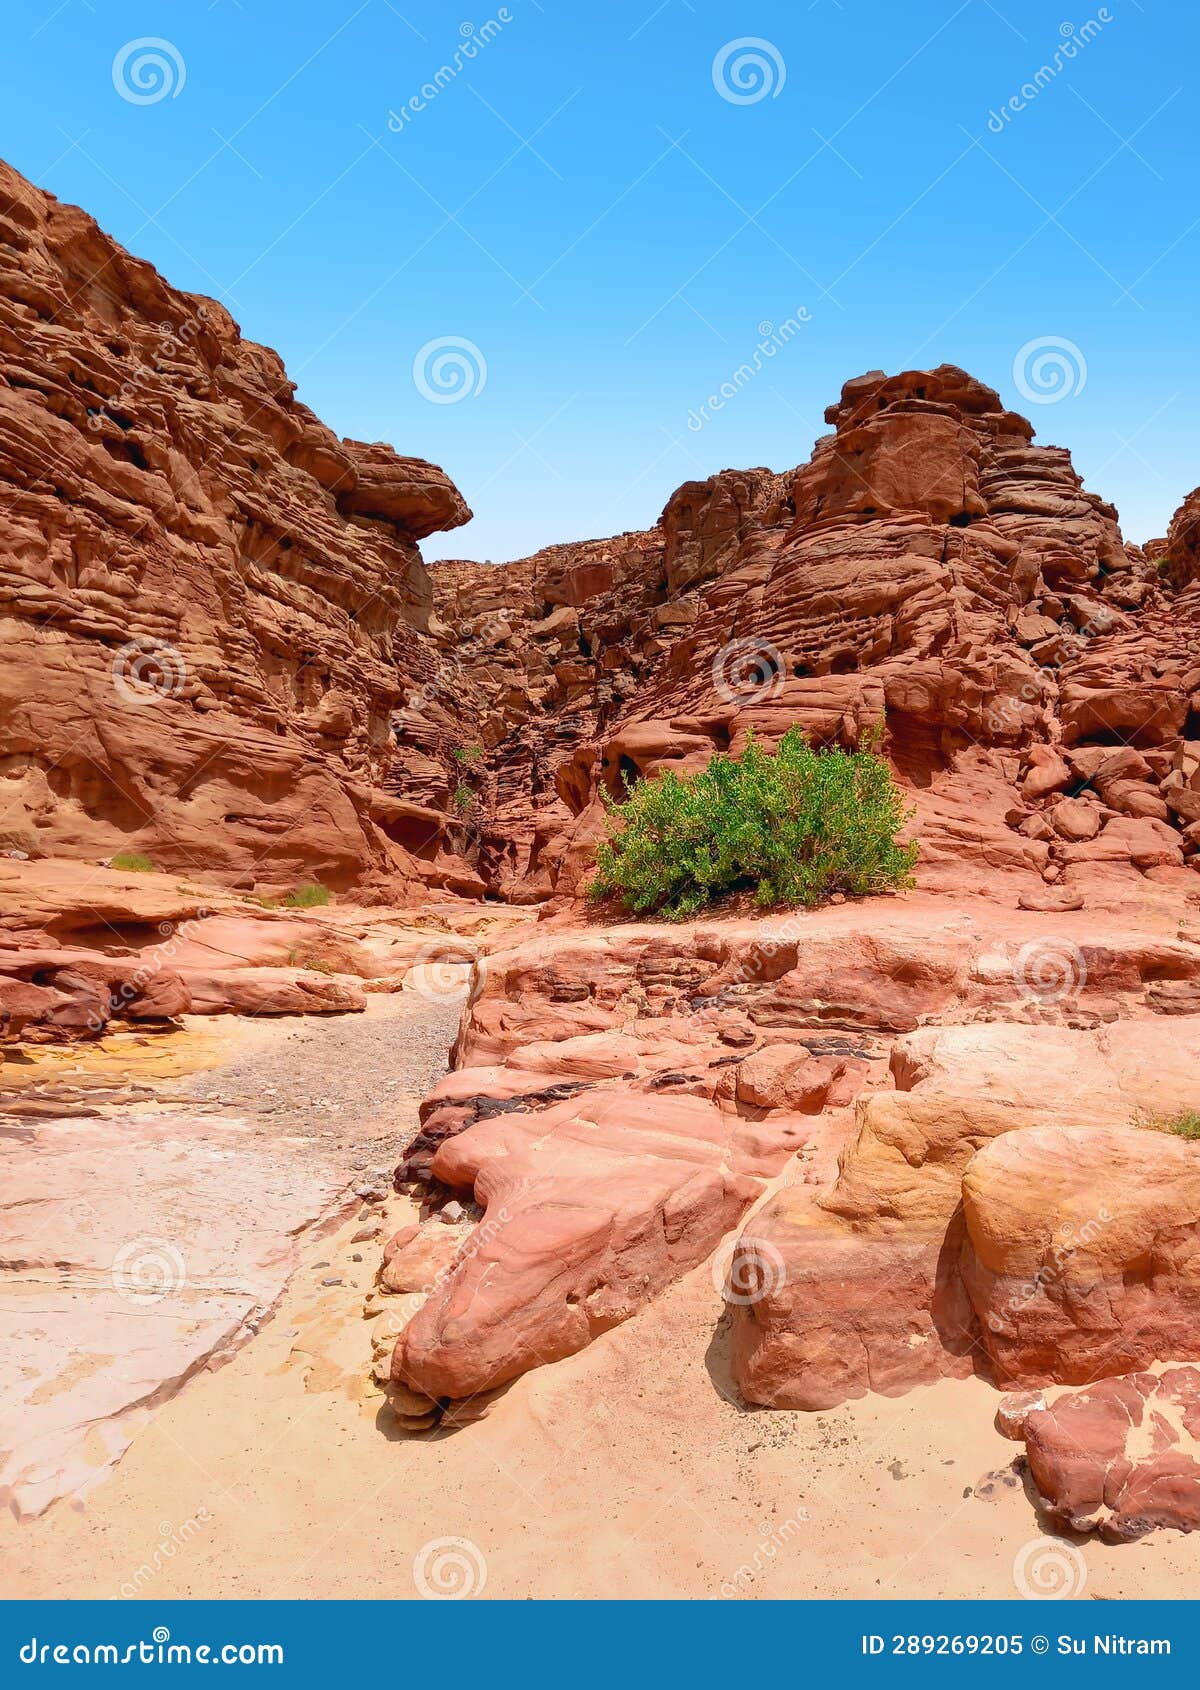 landscape of valle de piedra de granito and areniscas. rock formations in the desert of egypt. canyon colorado in sinai desert.